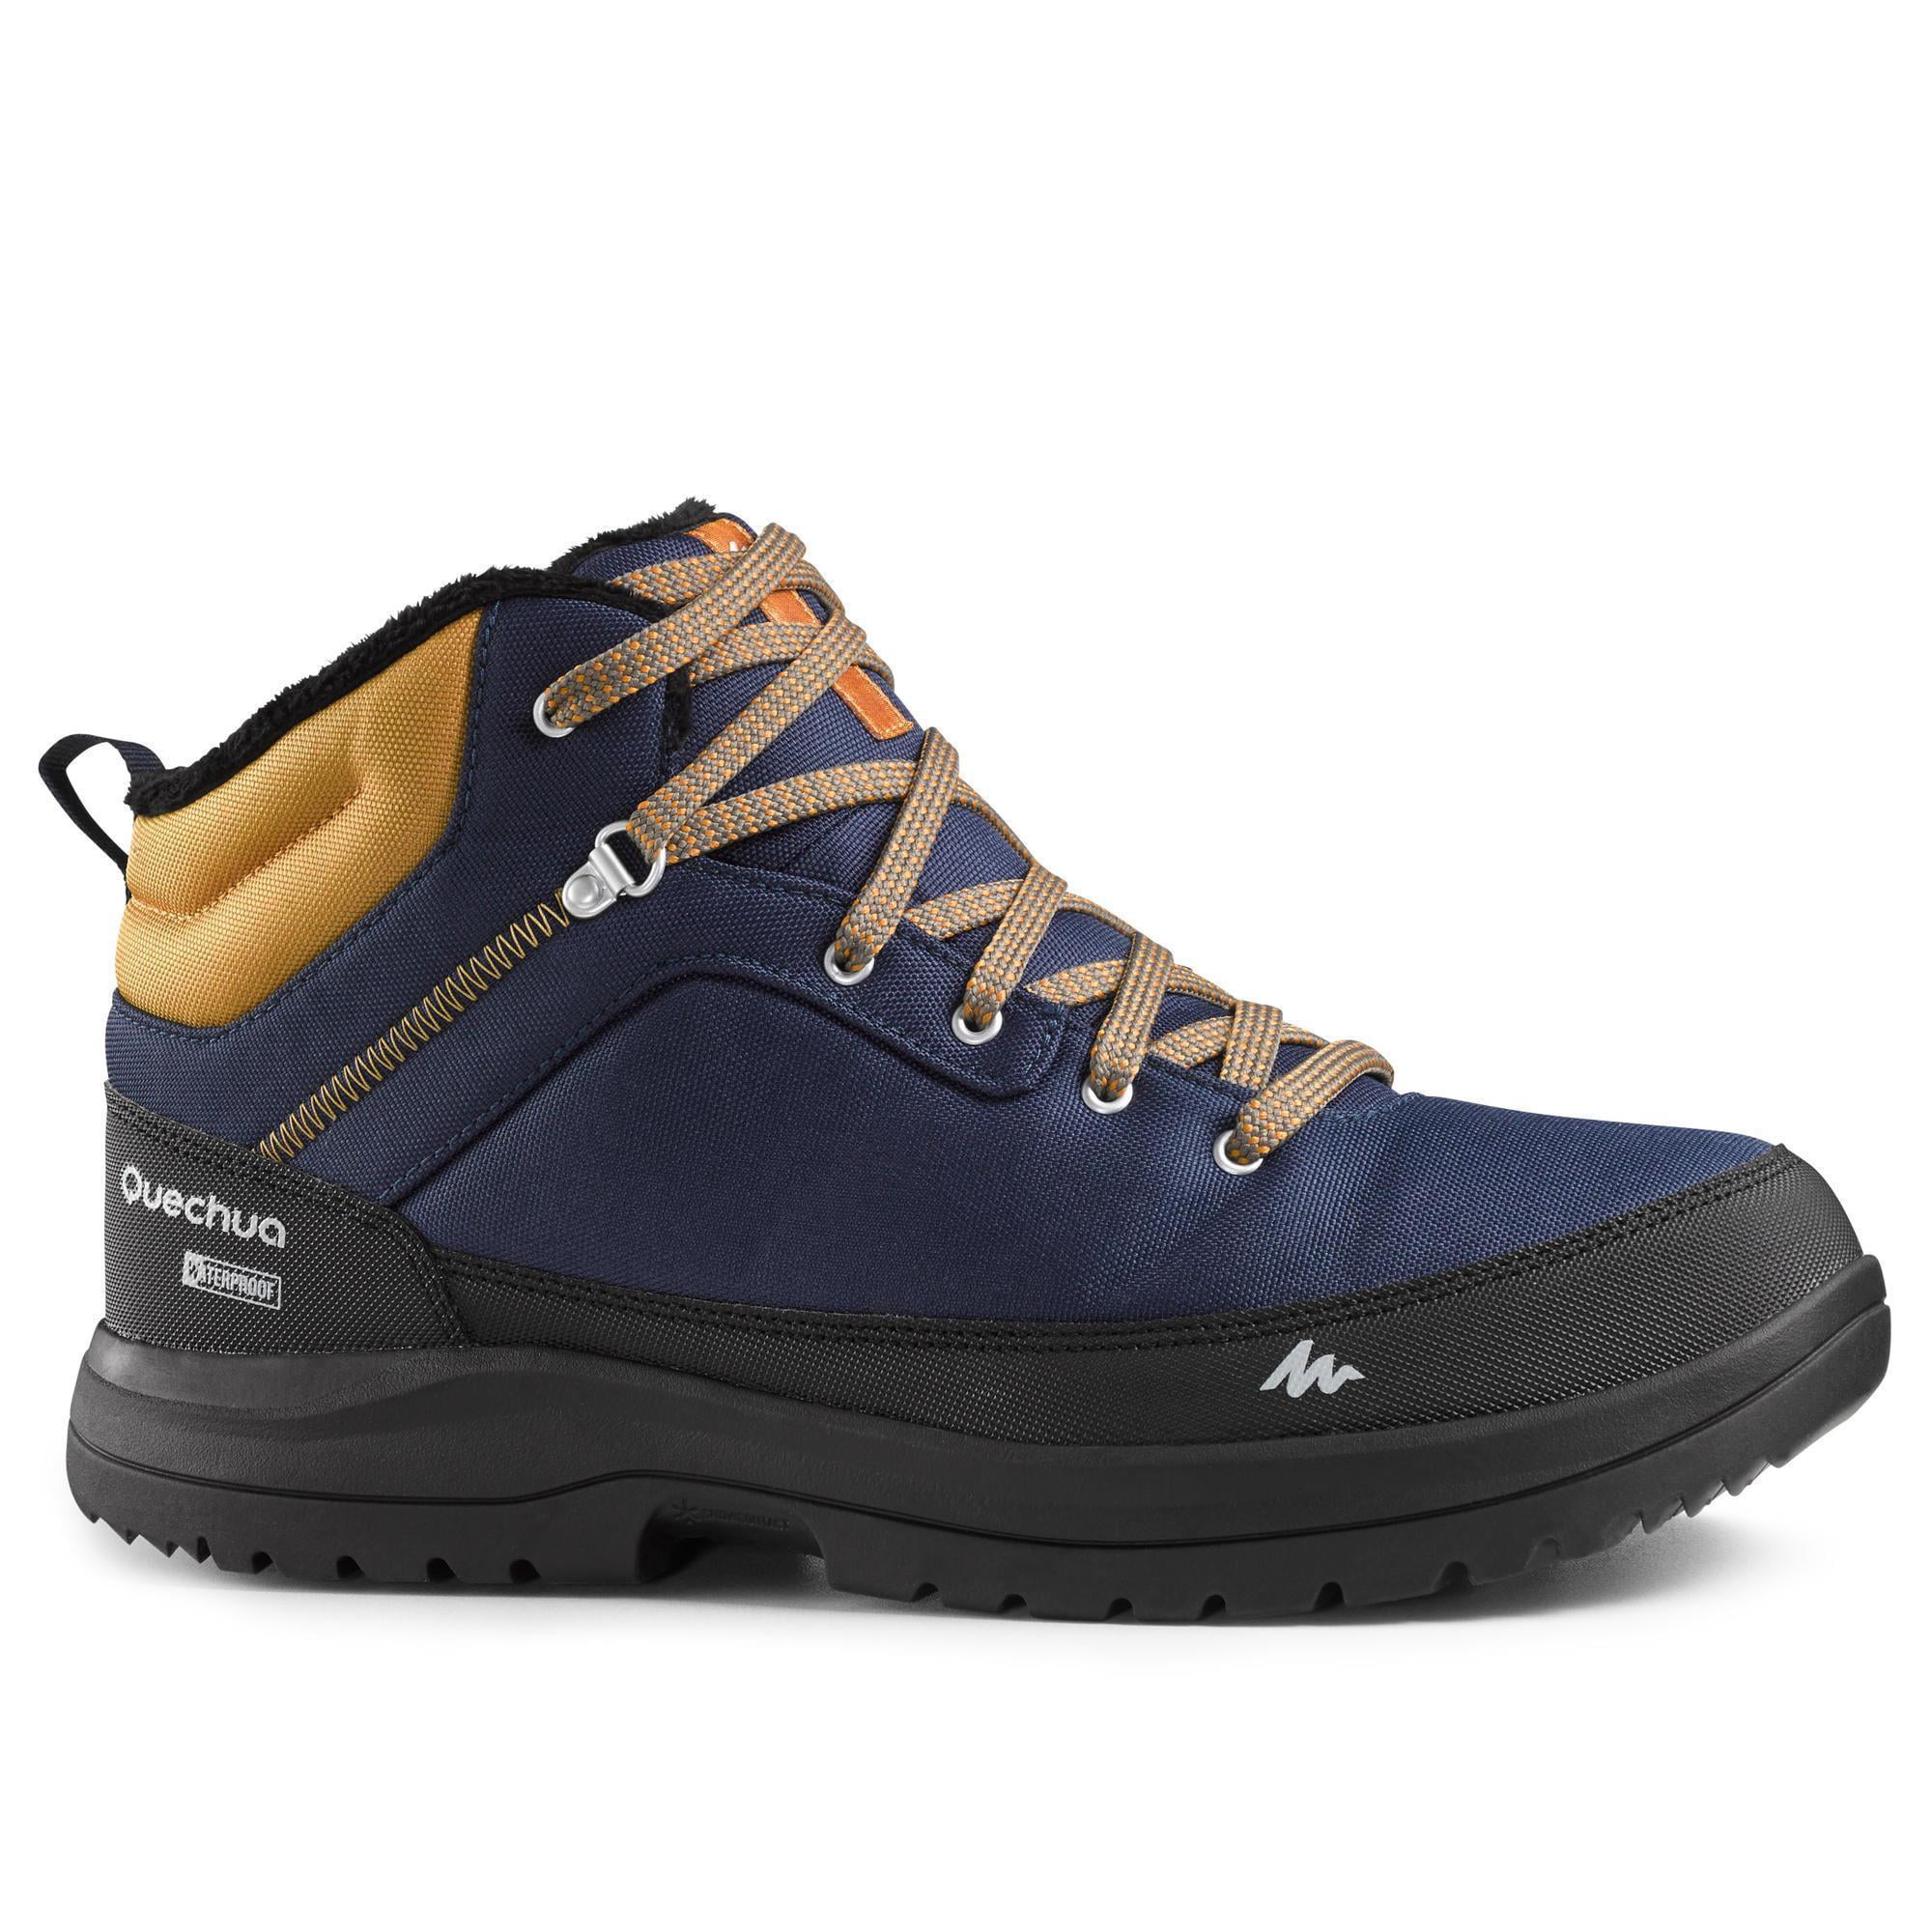 Snow Hiking Shoes Mid Warm SH100 